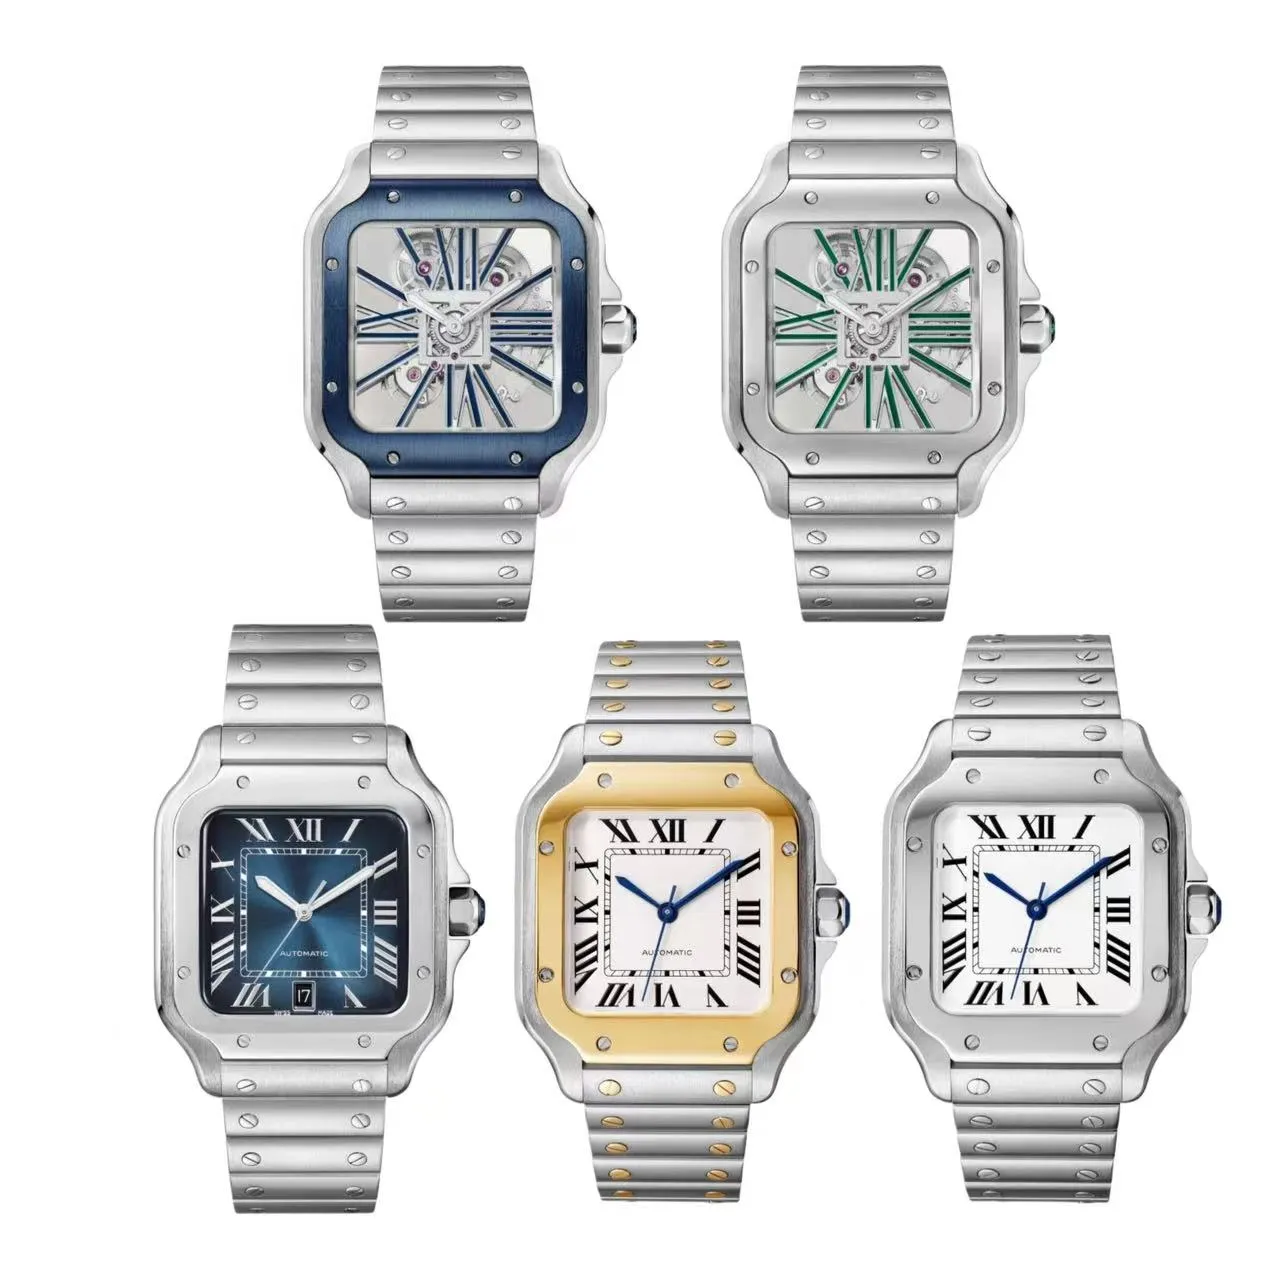 Mens Watch Santos MM 디자이너 시계 고품질 클래식 로마 다이얼 오리지널 고급 자동 기계식 L 스틸 밴드 방수 손목 시계와 상자